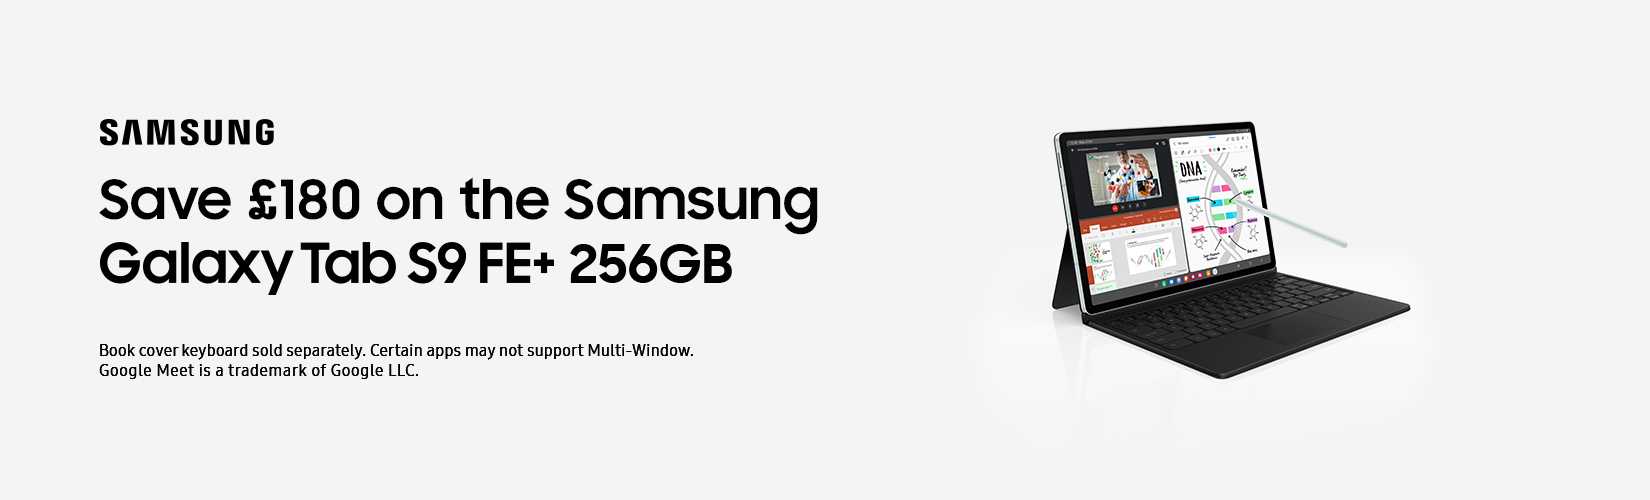 Samsung. Save £180 on the Samsung galaxy Tab S9 FE+ 256GB.